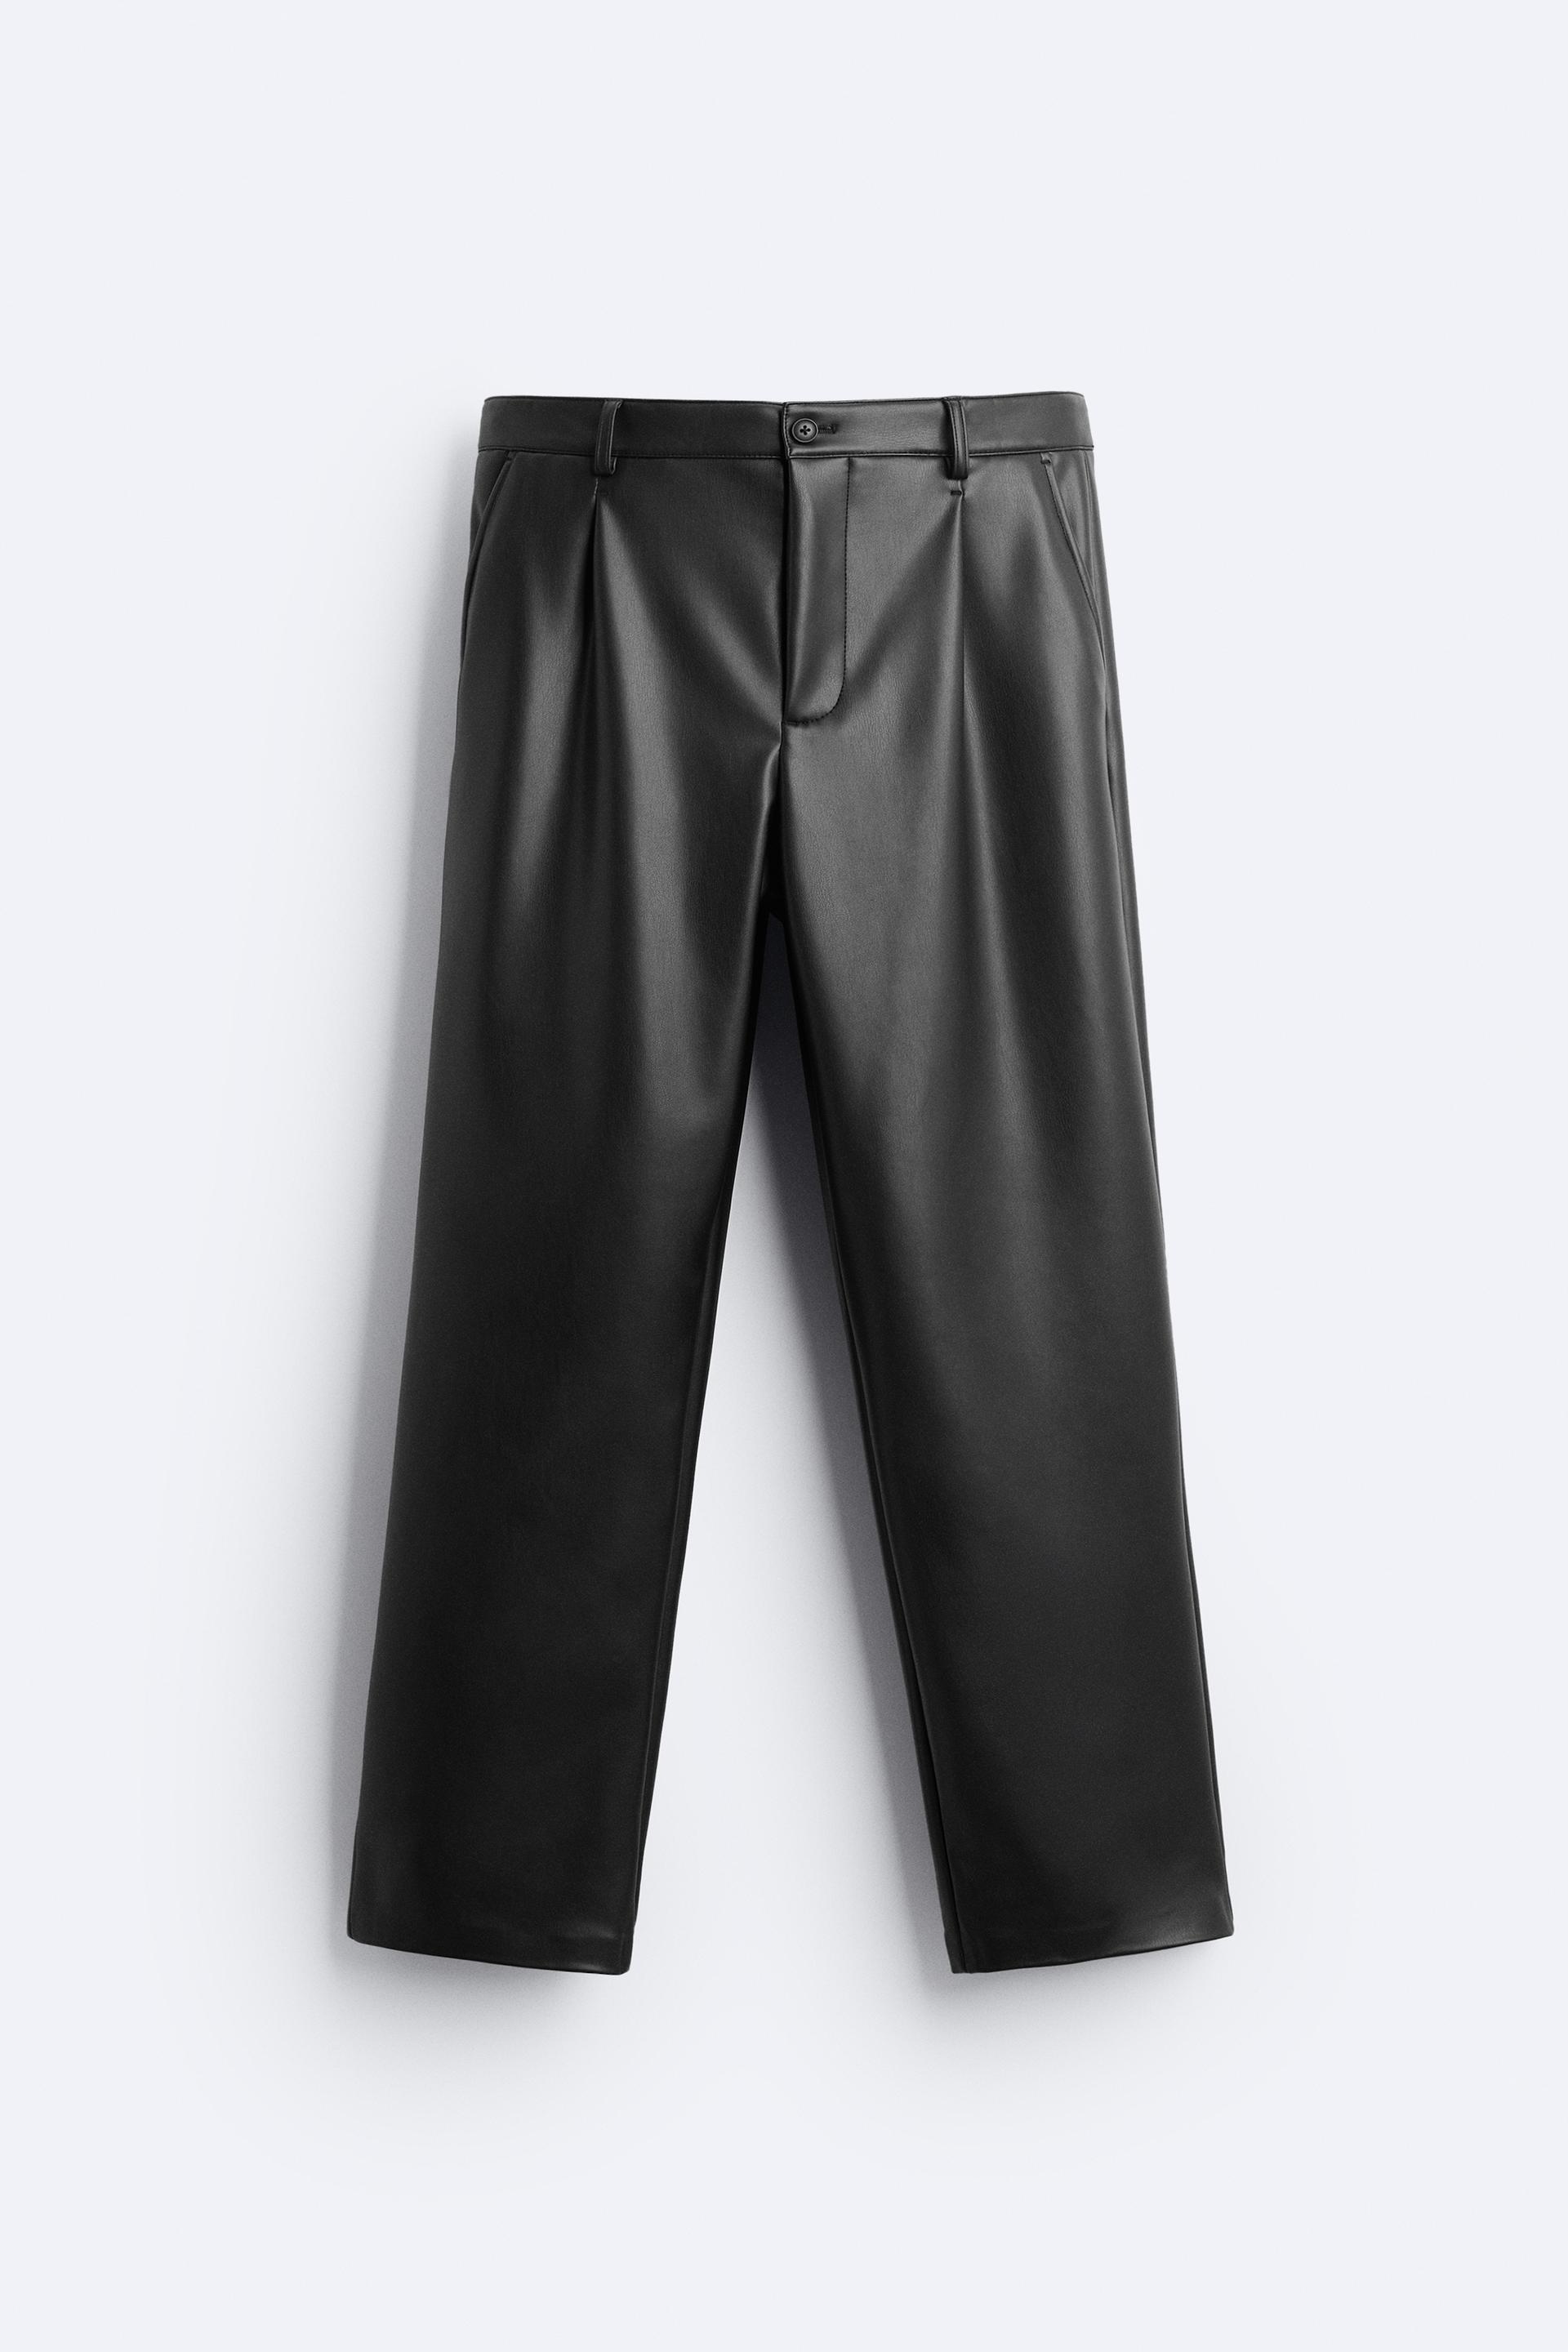 NWT Zara extra long flare leggings pants black vegan leather